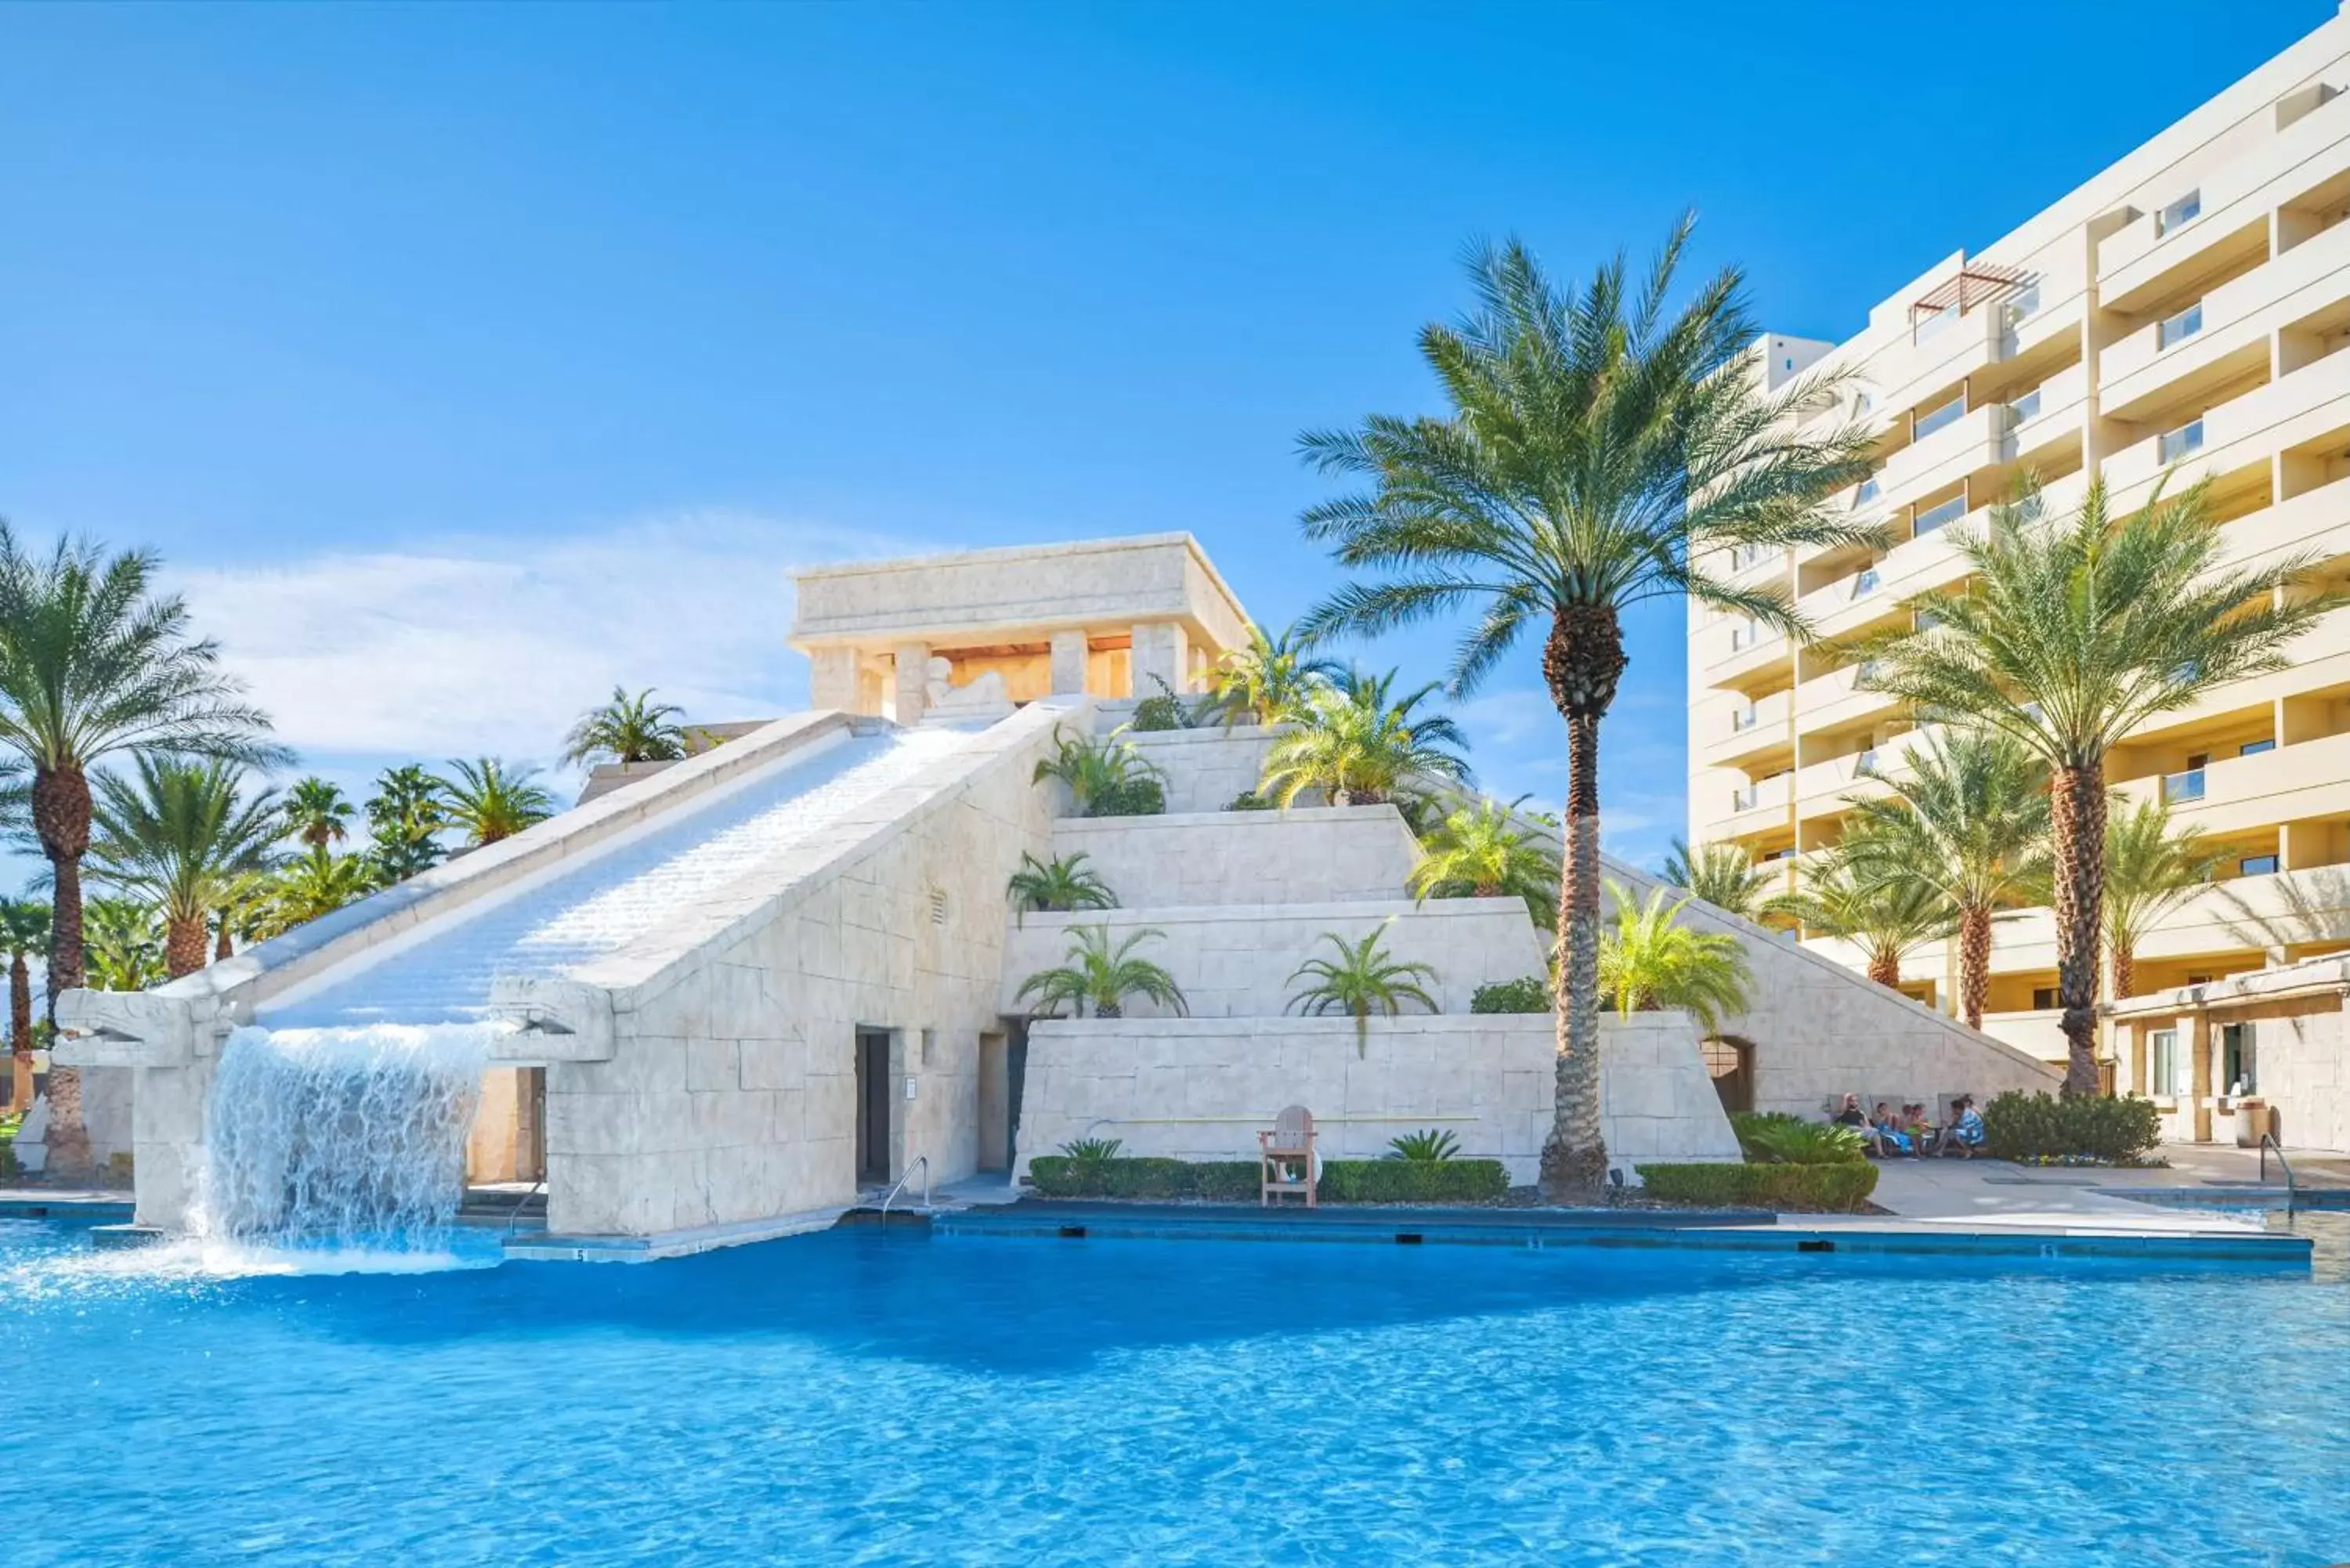 Pool view, Swimming Pool in Hilton Vacation Club Cancun Resort Las Vegas